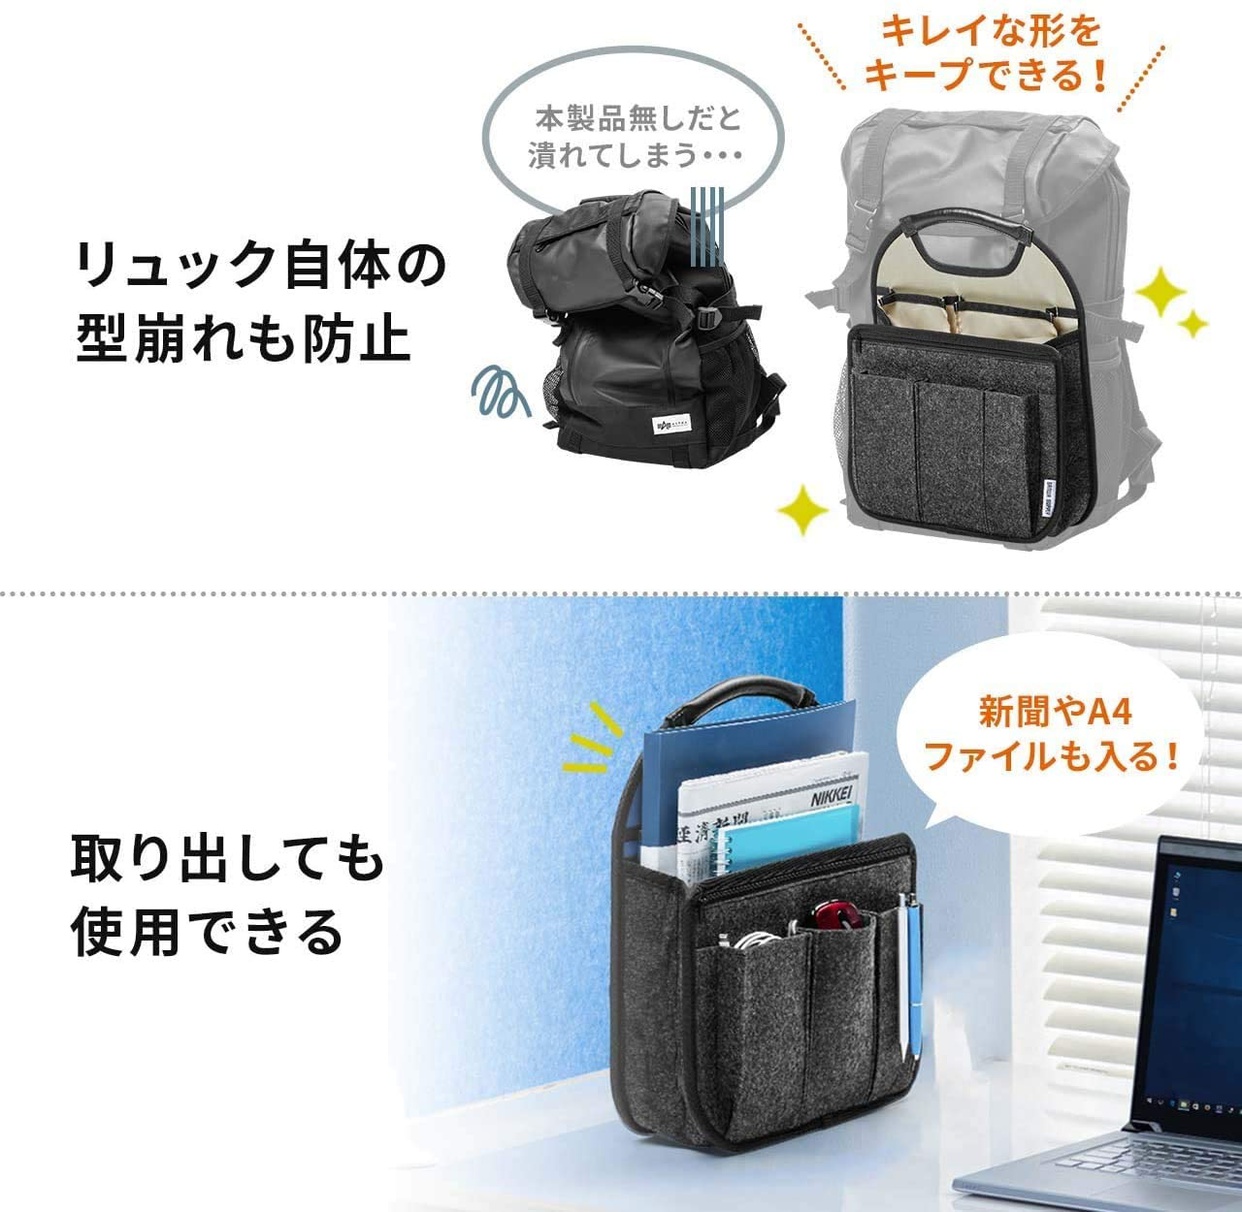 SANWA SUPPLY(サンワサプライ) バッグインバッグ 200-BAGIN017の商品画像3 